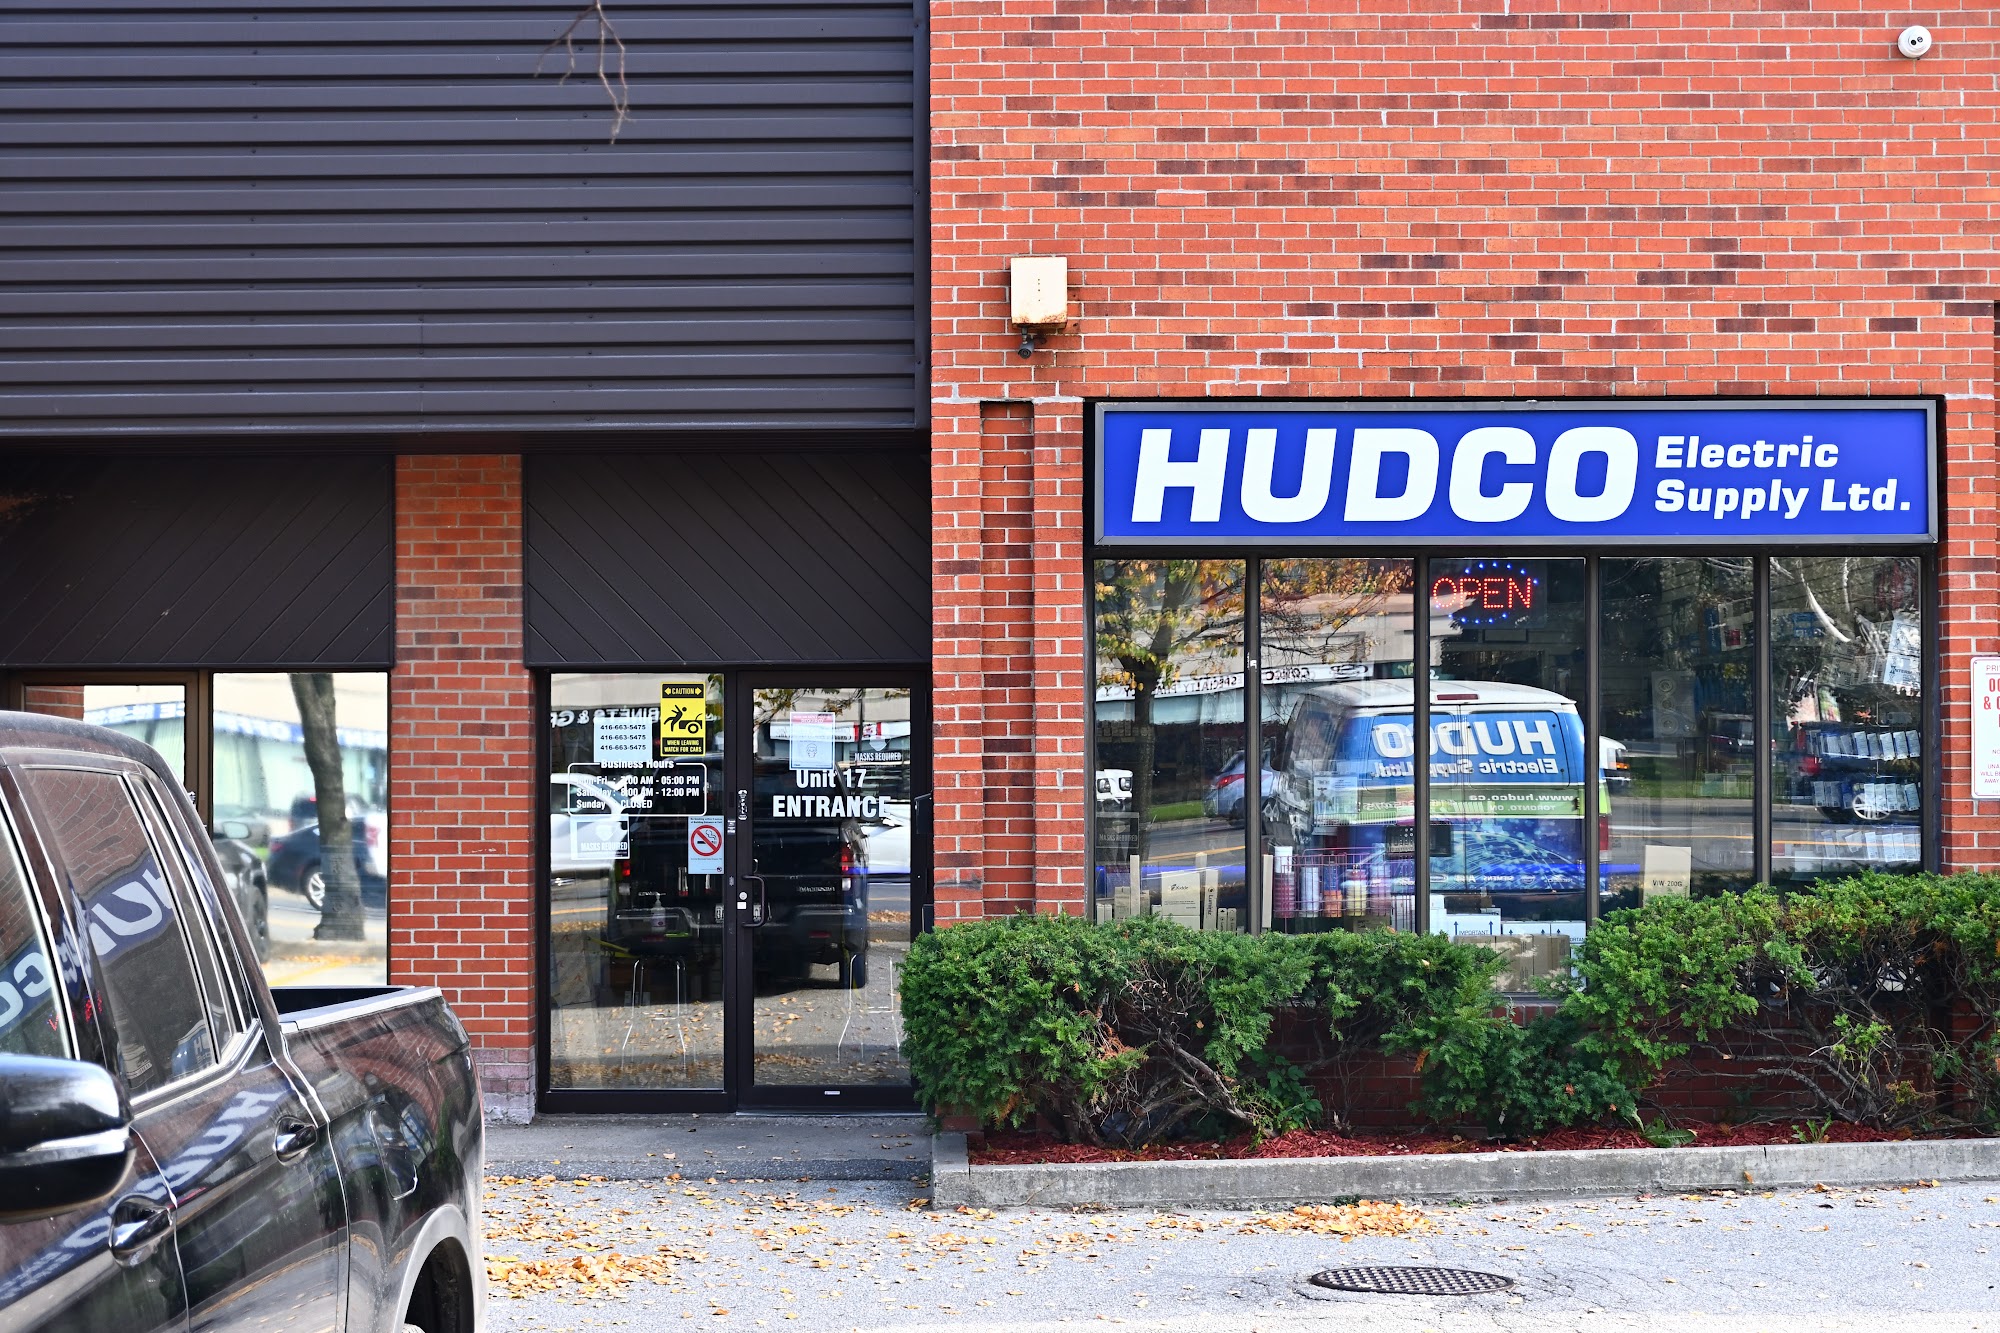 Hudco Electric Supply Ltd